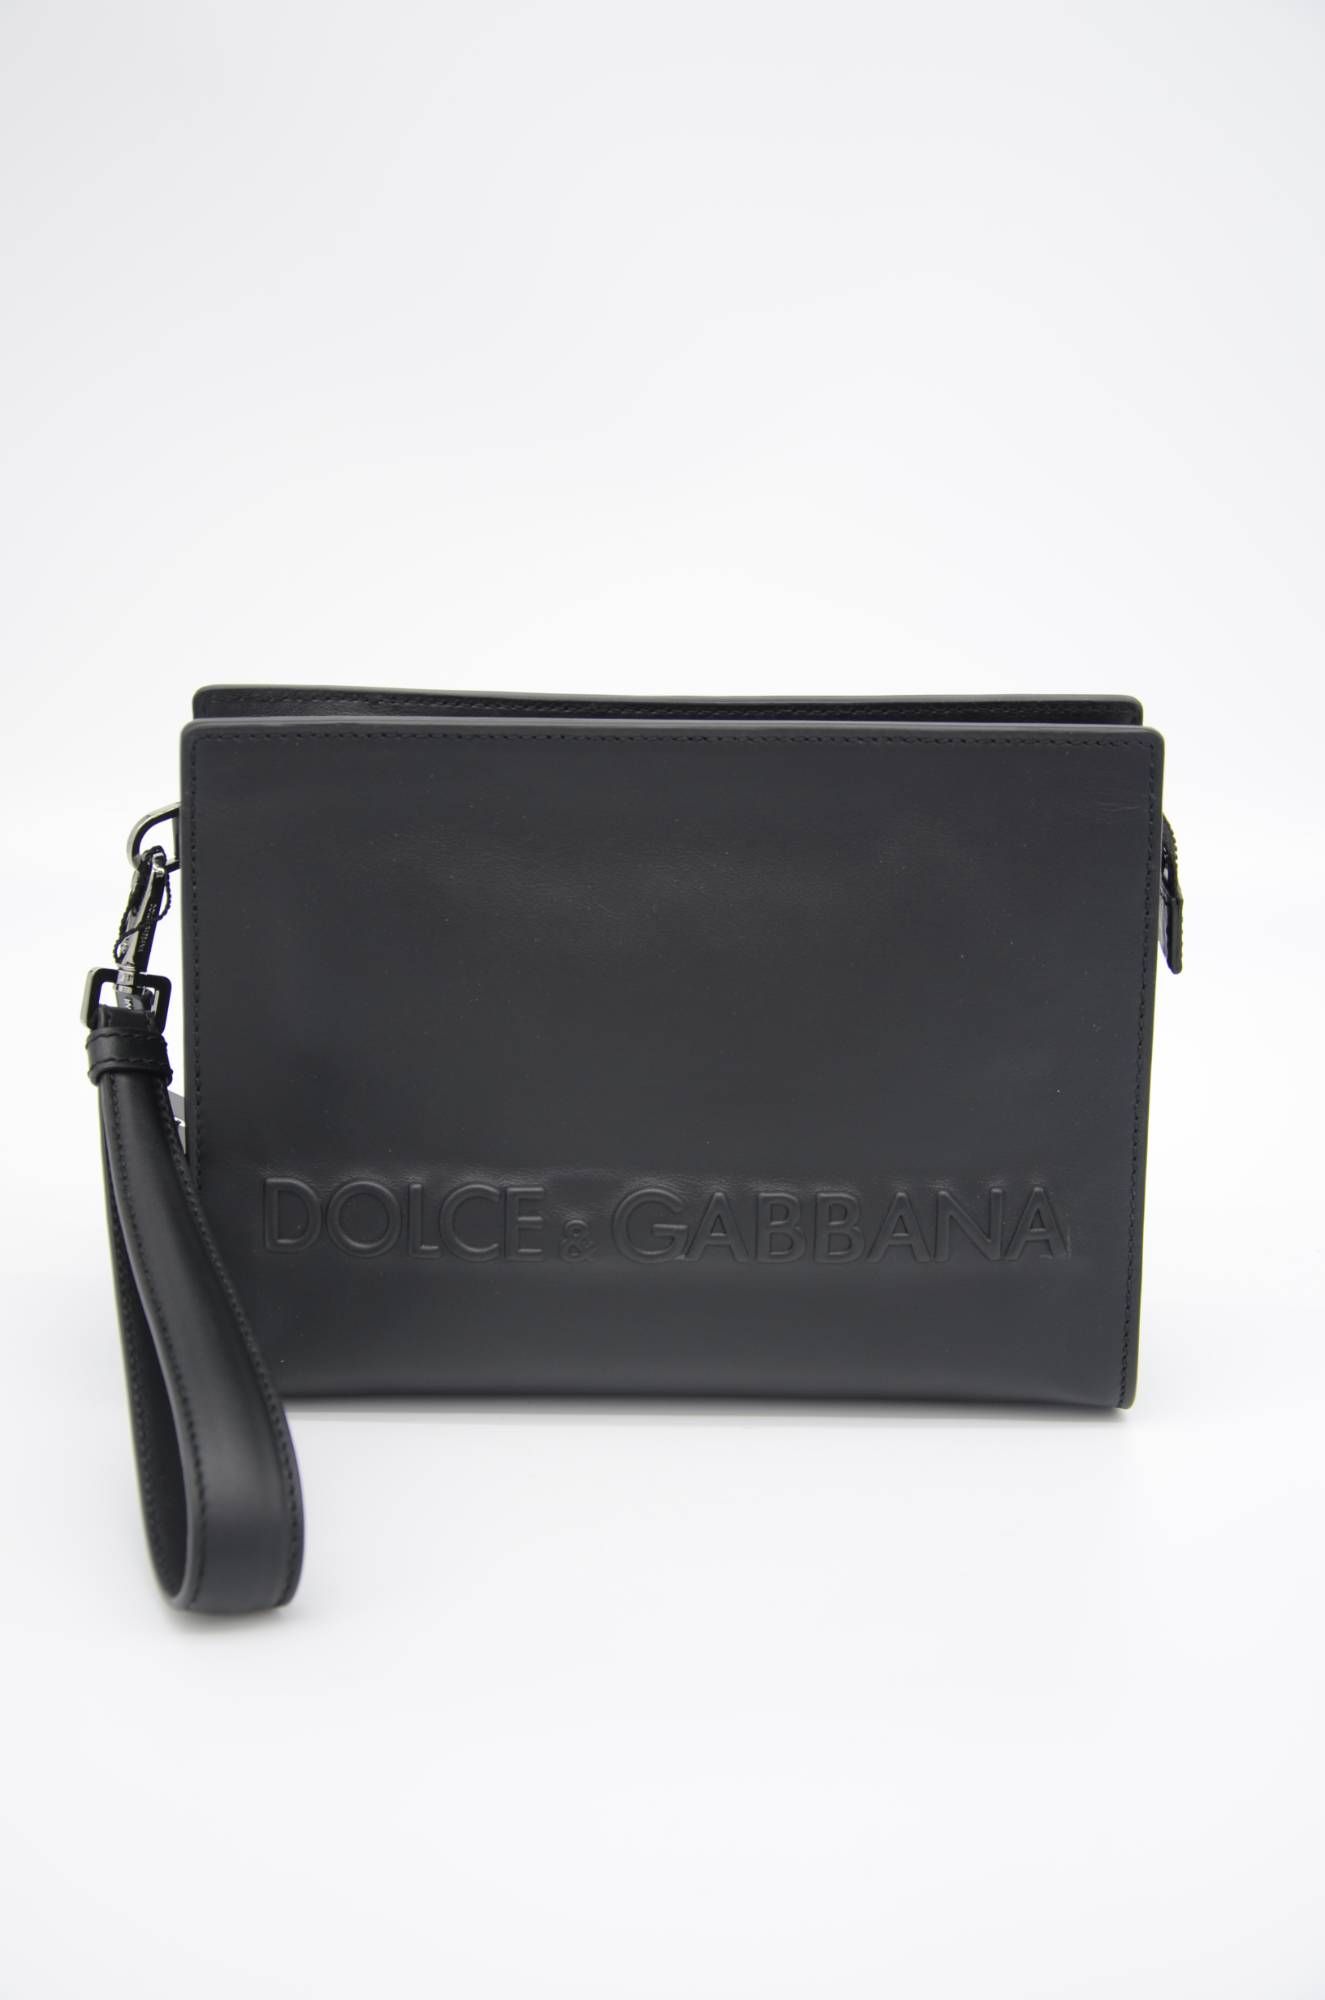 Dolce & Gabbana Men Leather Clutch Bag
With Dolce & Gabbana Logo
With Zipper